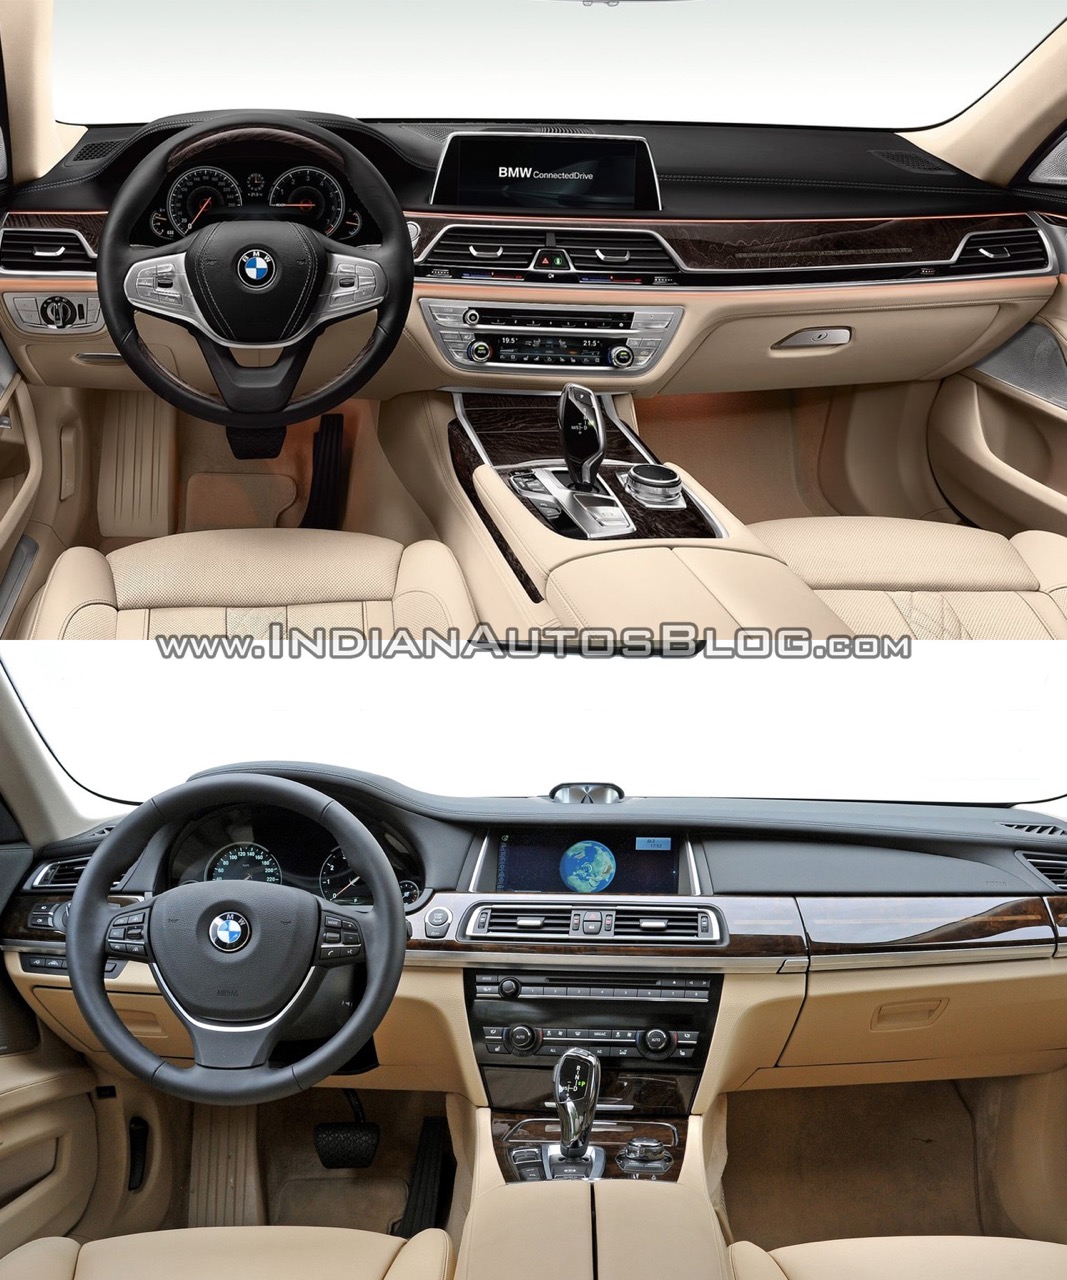 2016 BMW 7 Series vs 2014 BMW 7 Series - Old vs New